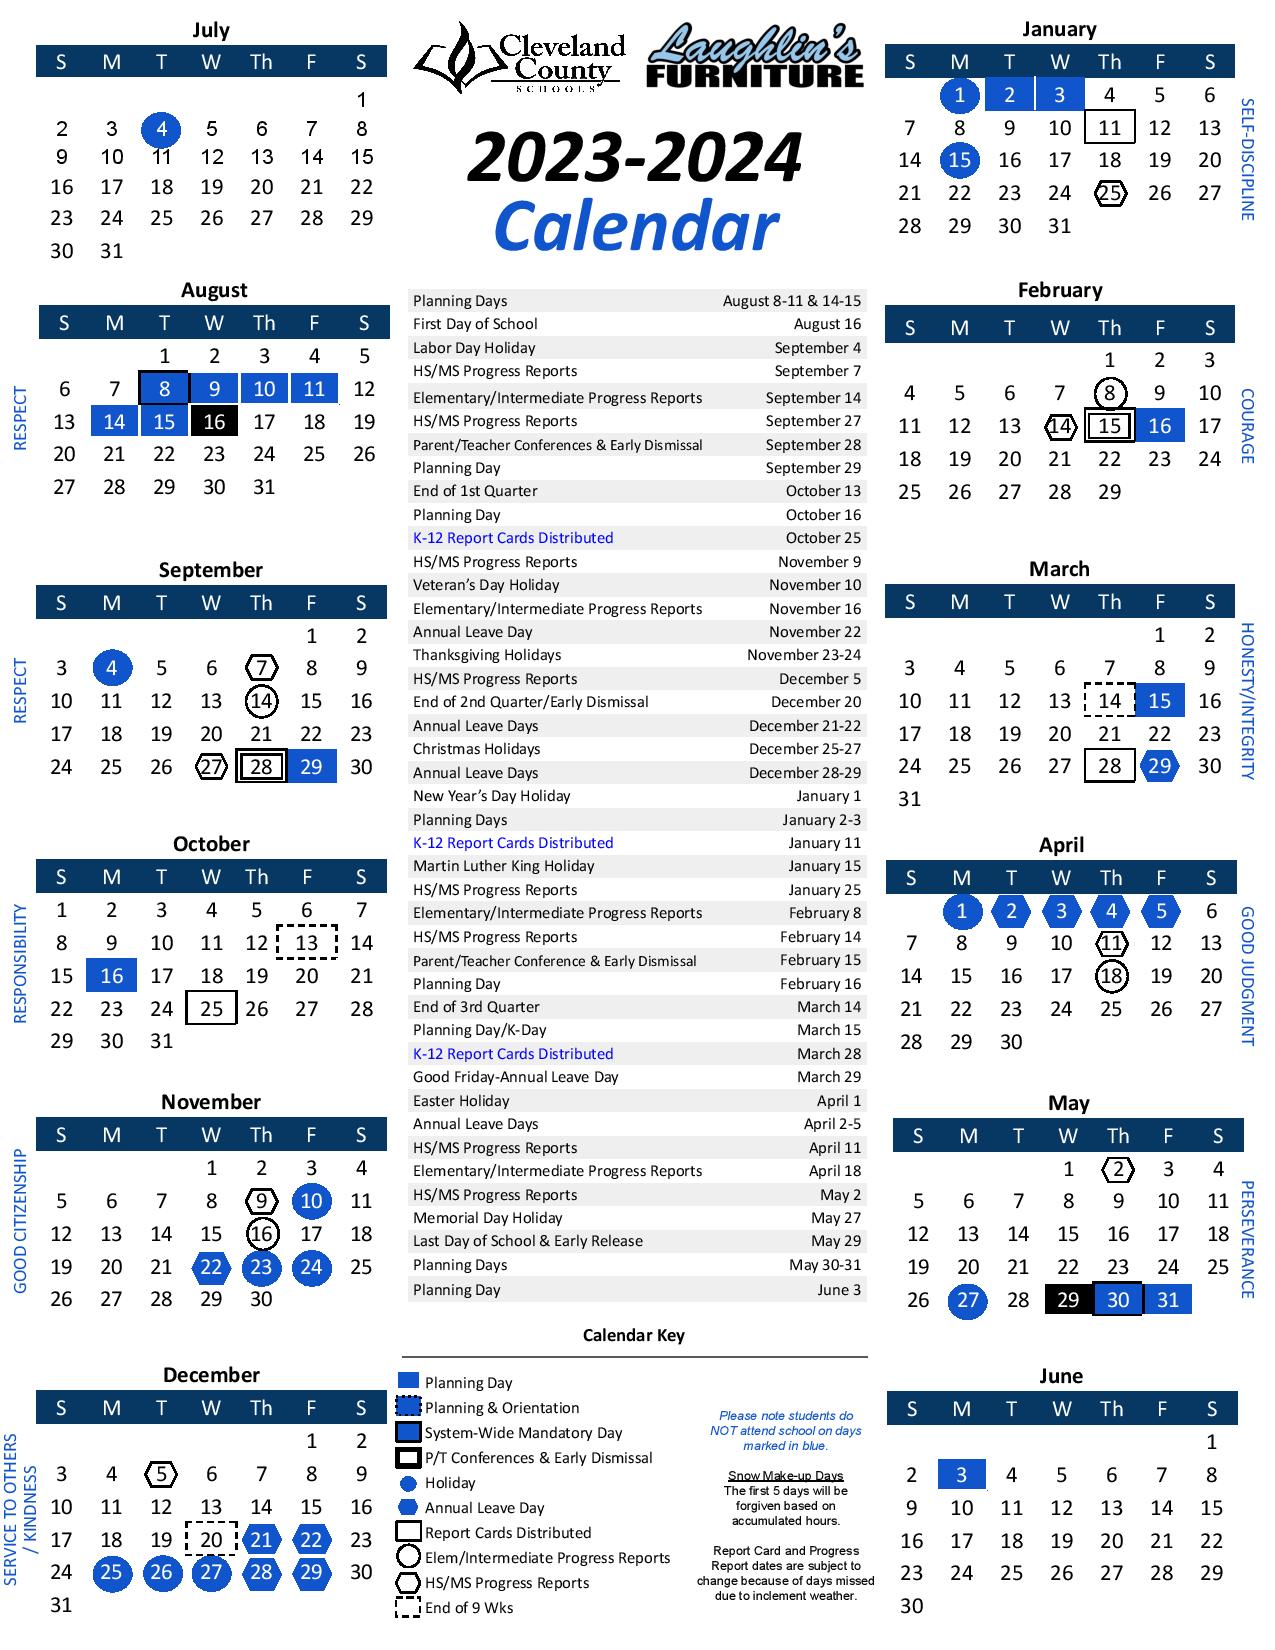 Cleveland County Schools Calendar 2023 2024 in PDF